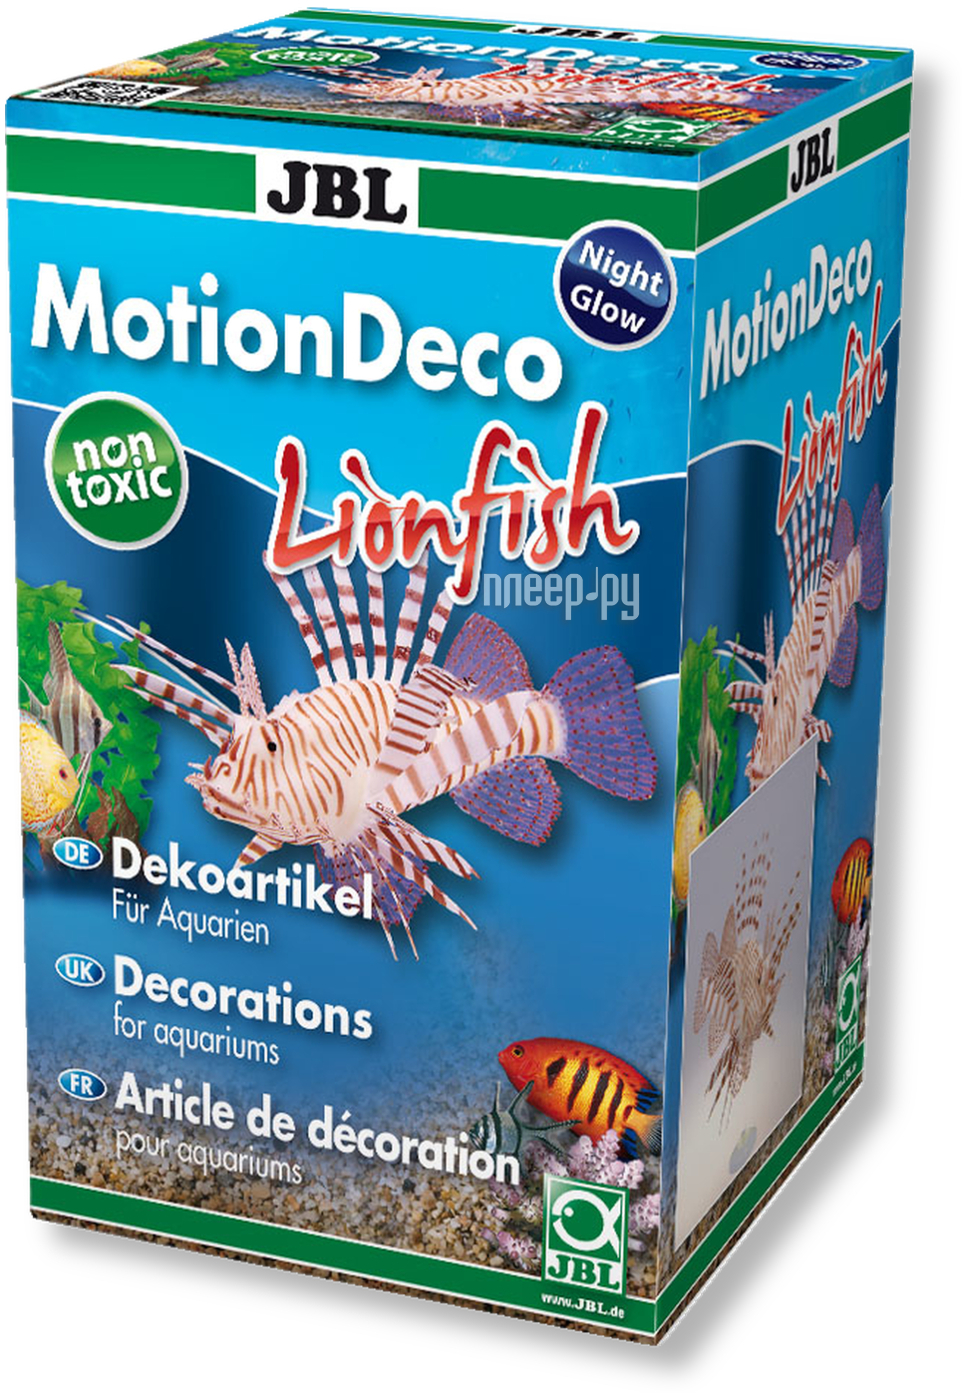 JBL MotionDeco Lionfish JBL6045500 